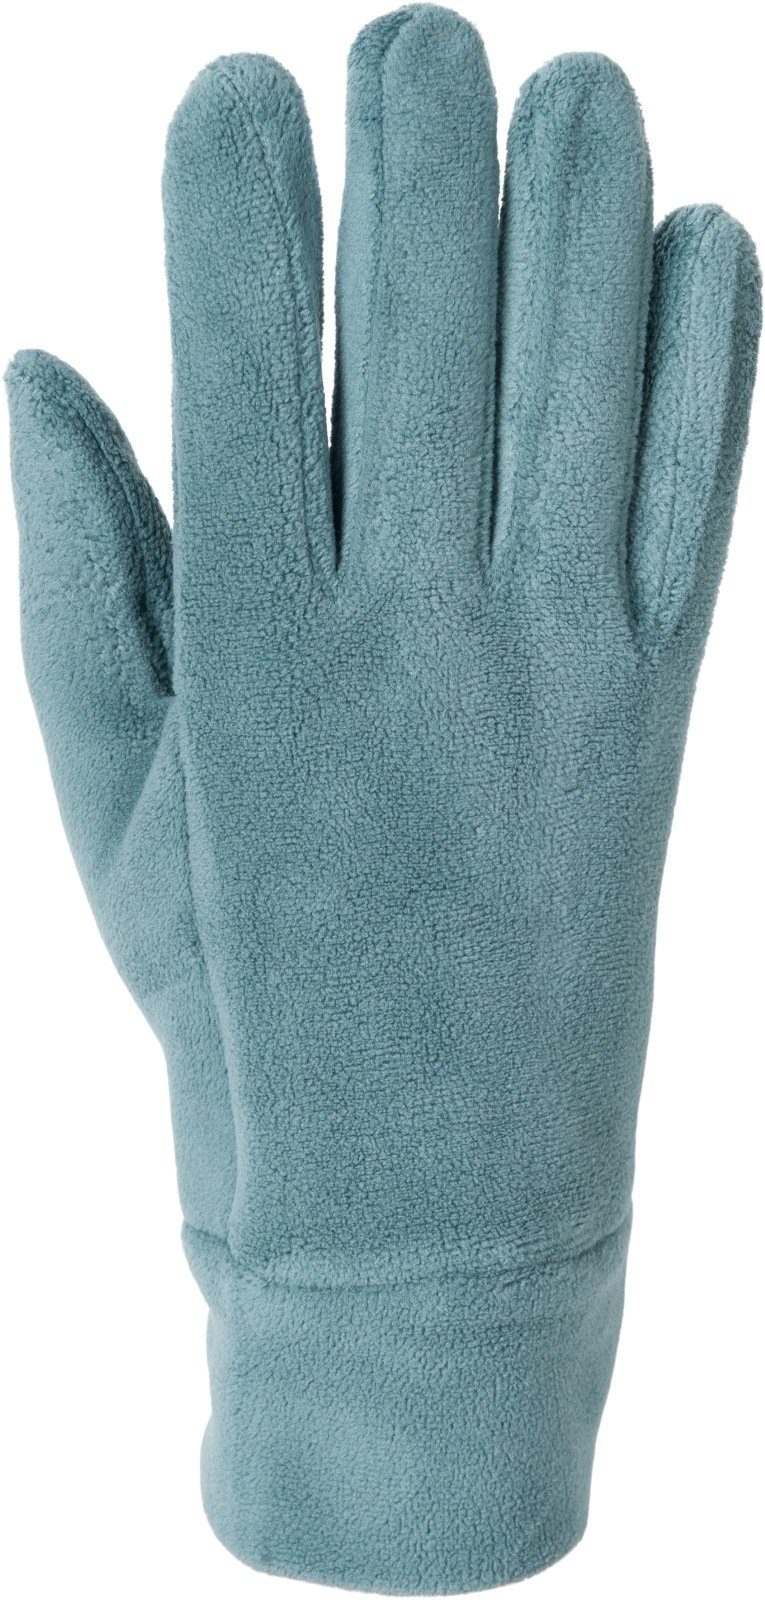 Fleecehandschuhe Taubenblau Fleece Einfarbige Handschuhe Touchscreen styleBREAKER